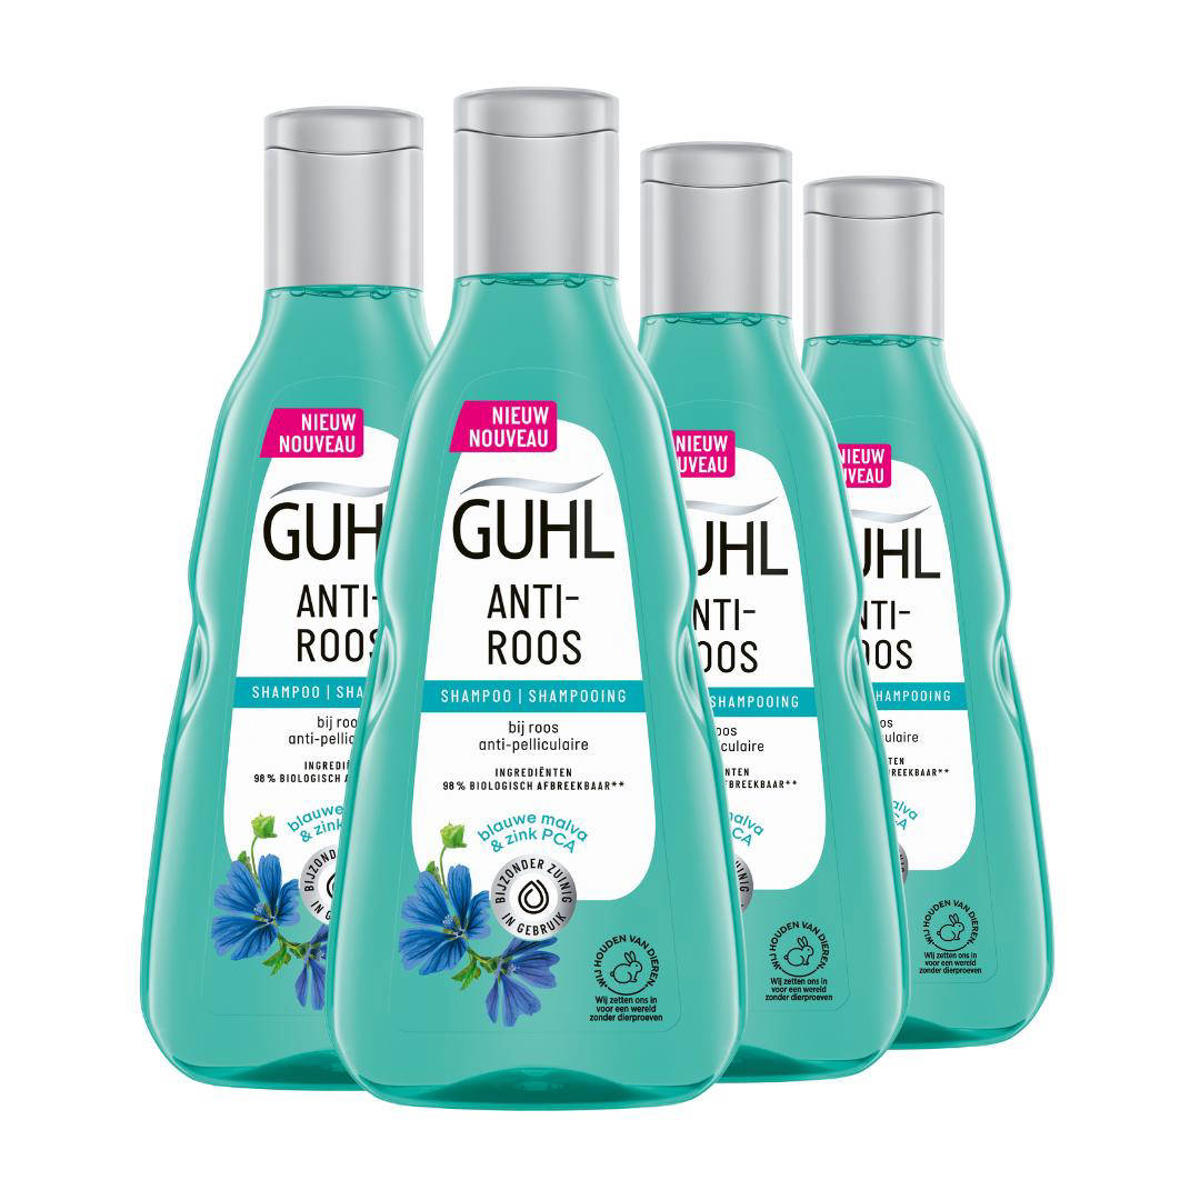 binair Oeganda Gezond eten Guhl Anti-Roos shampoo - 4 x 250 ml - voordeelverpakking | wehkamp